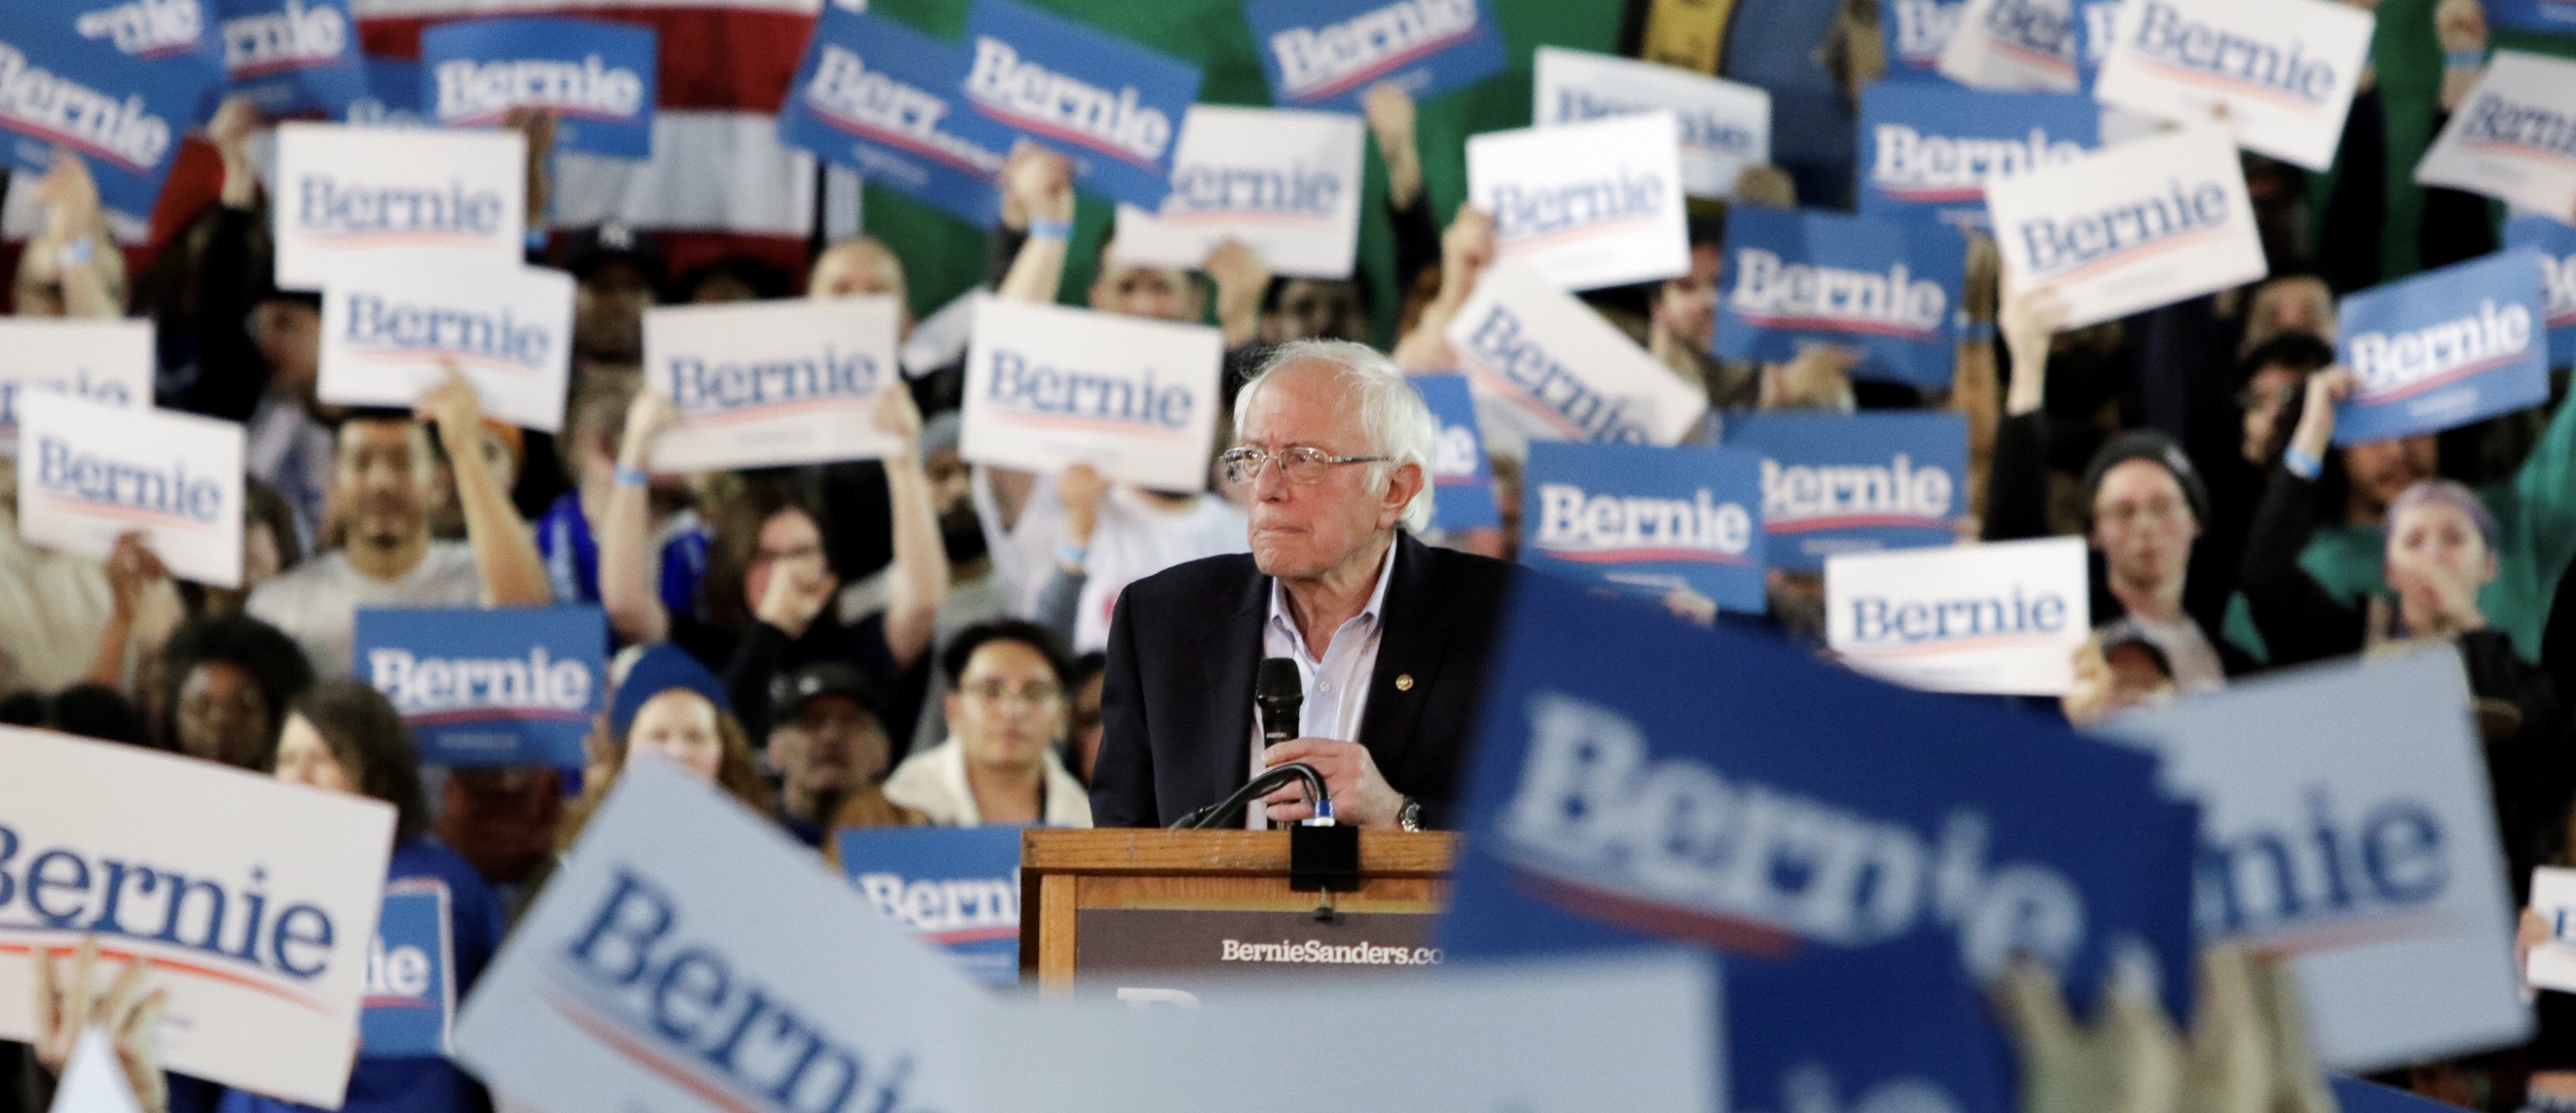 U.S. Democratic 2020 presidential candidate Senator Bernie Sanders speaks at a campaign rally in the Tacoma Dome in Tacoma, Washington, U.S. Feb. 17, 2020. REUTERS/Jason Redmond